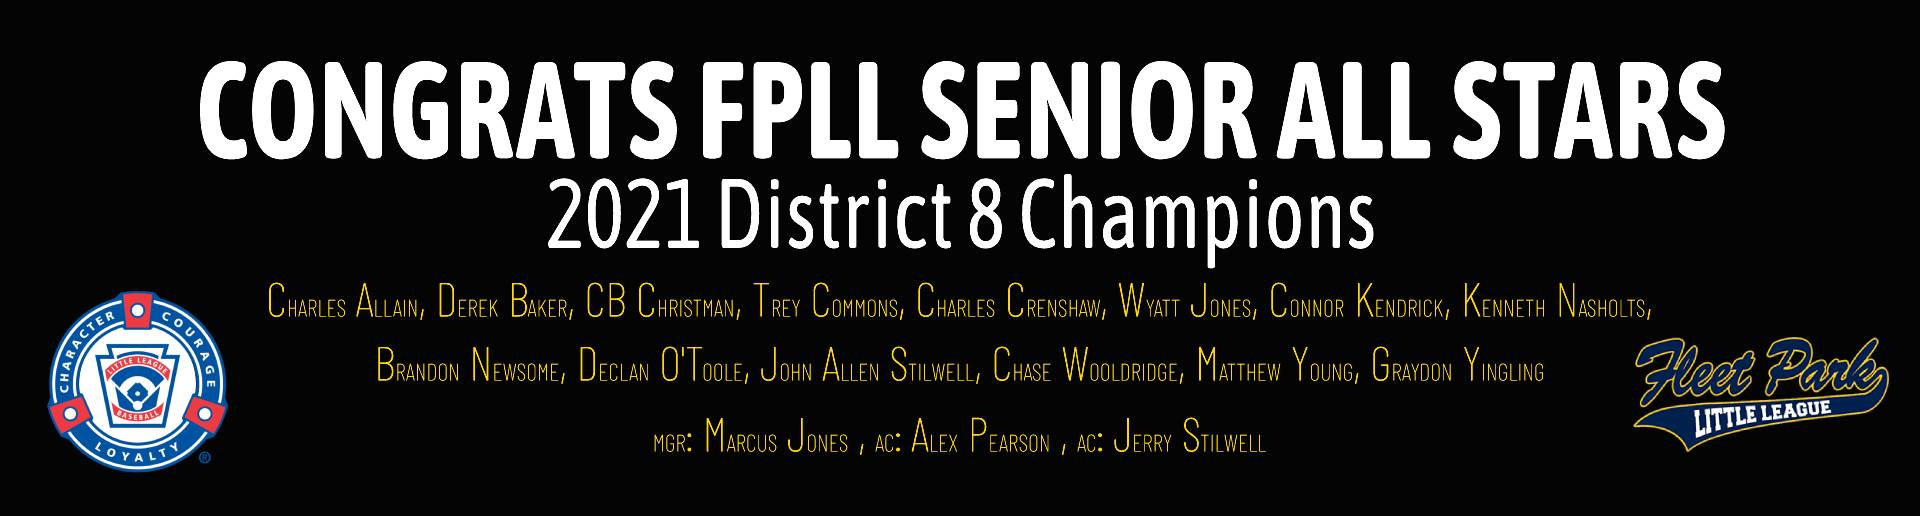 FPLL Senior All Stars